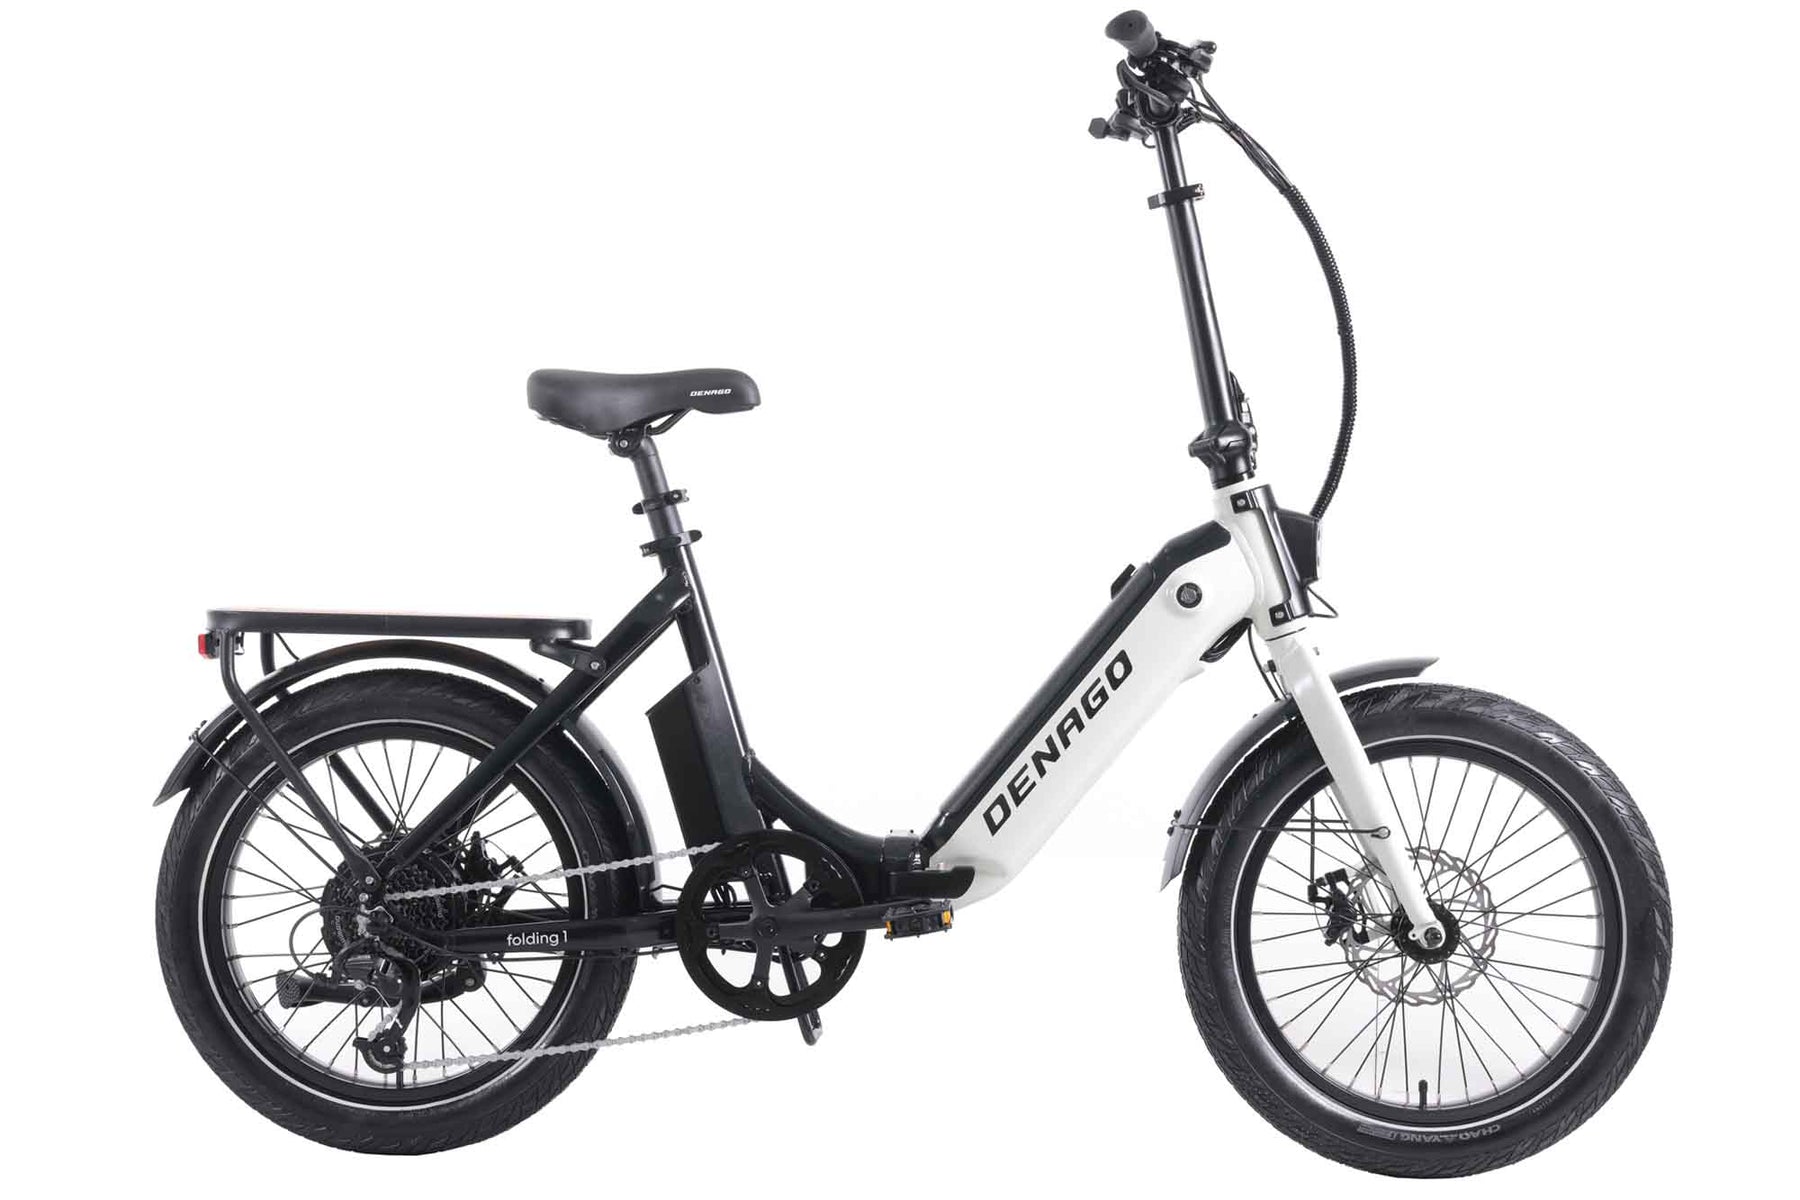 Denago Folding 1 eBike  Premium Comfort & Quality Foldable Fat Tire  Electric Bike